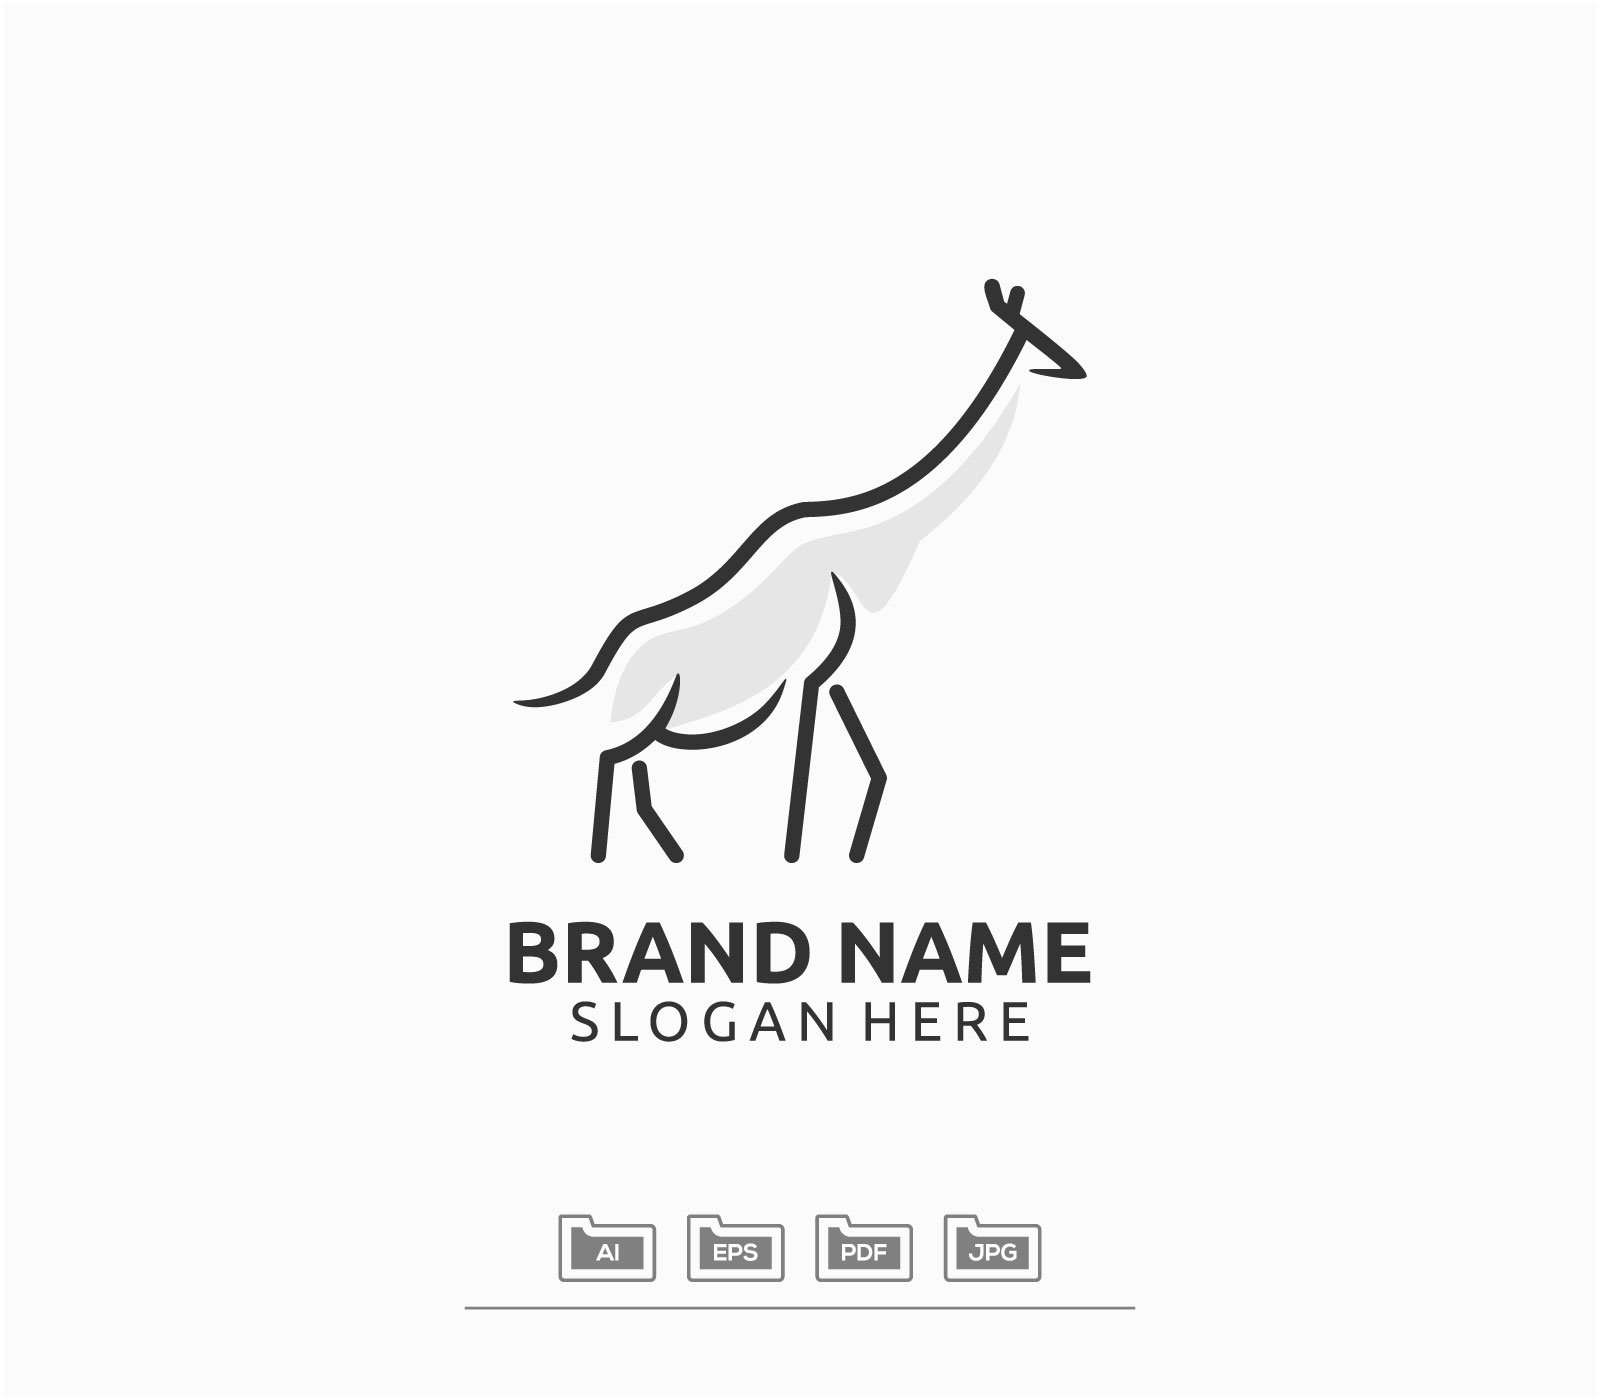 Giraffe Logo Design cover image.